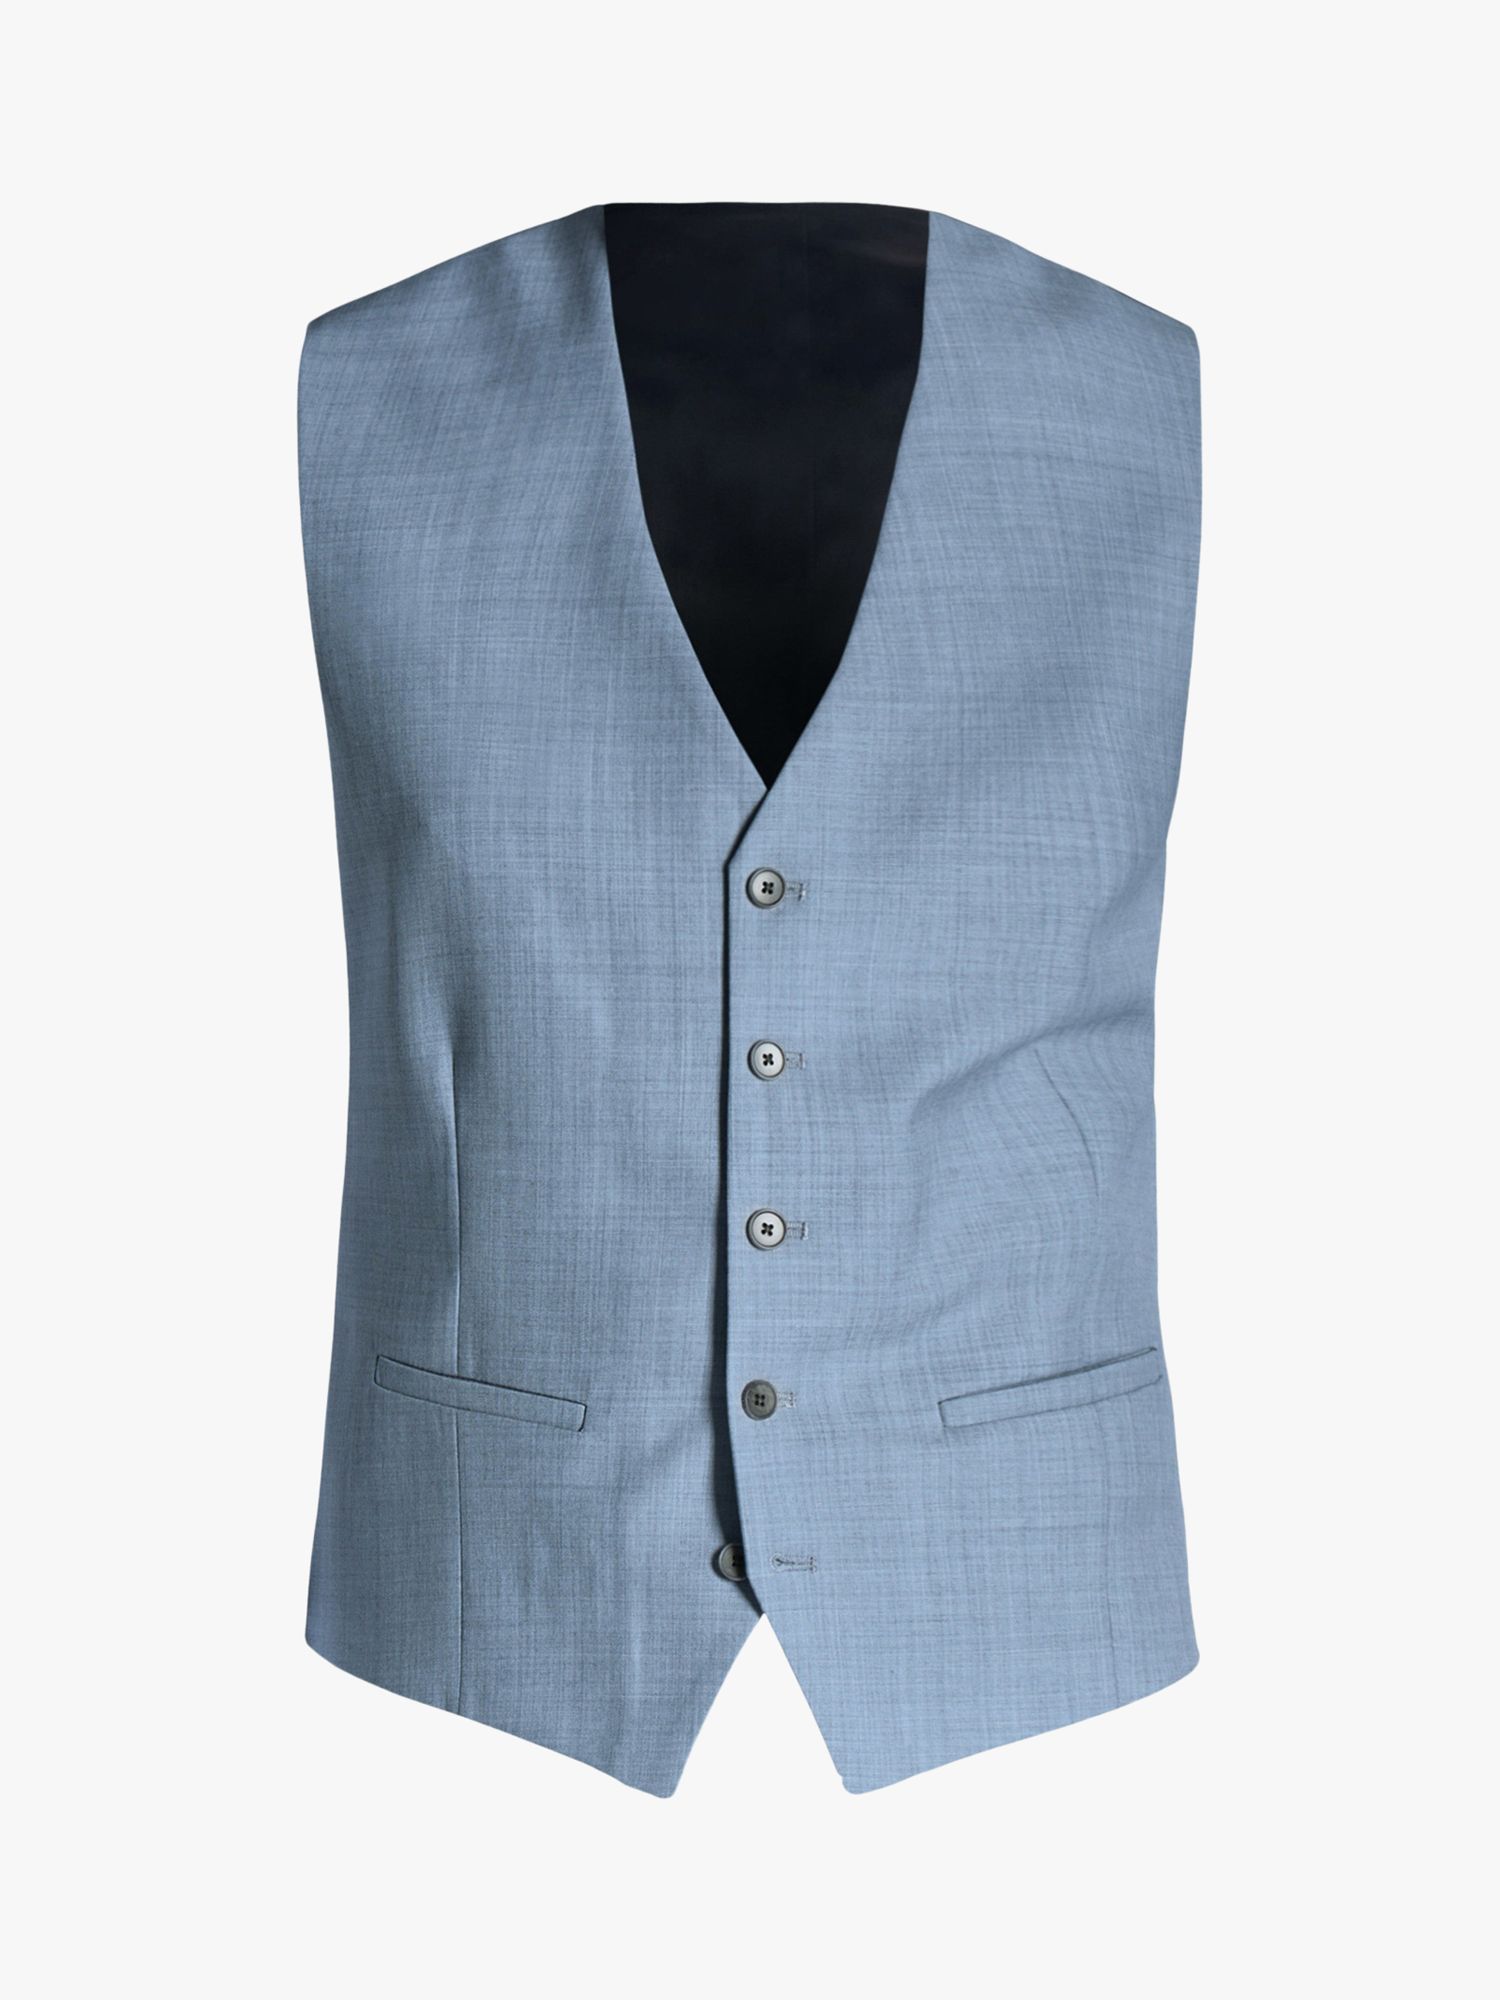 Ted Baker Slim Fit Waistcoat, Blue, 38R